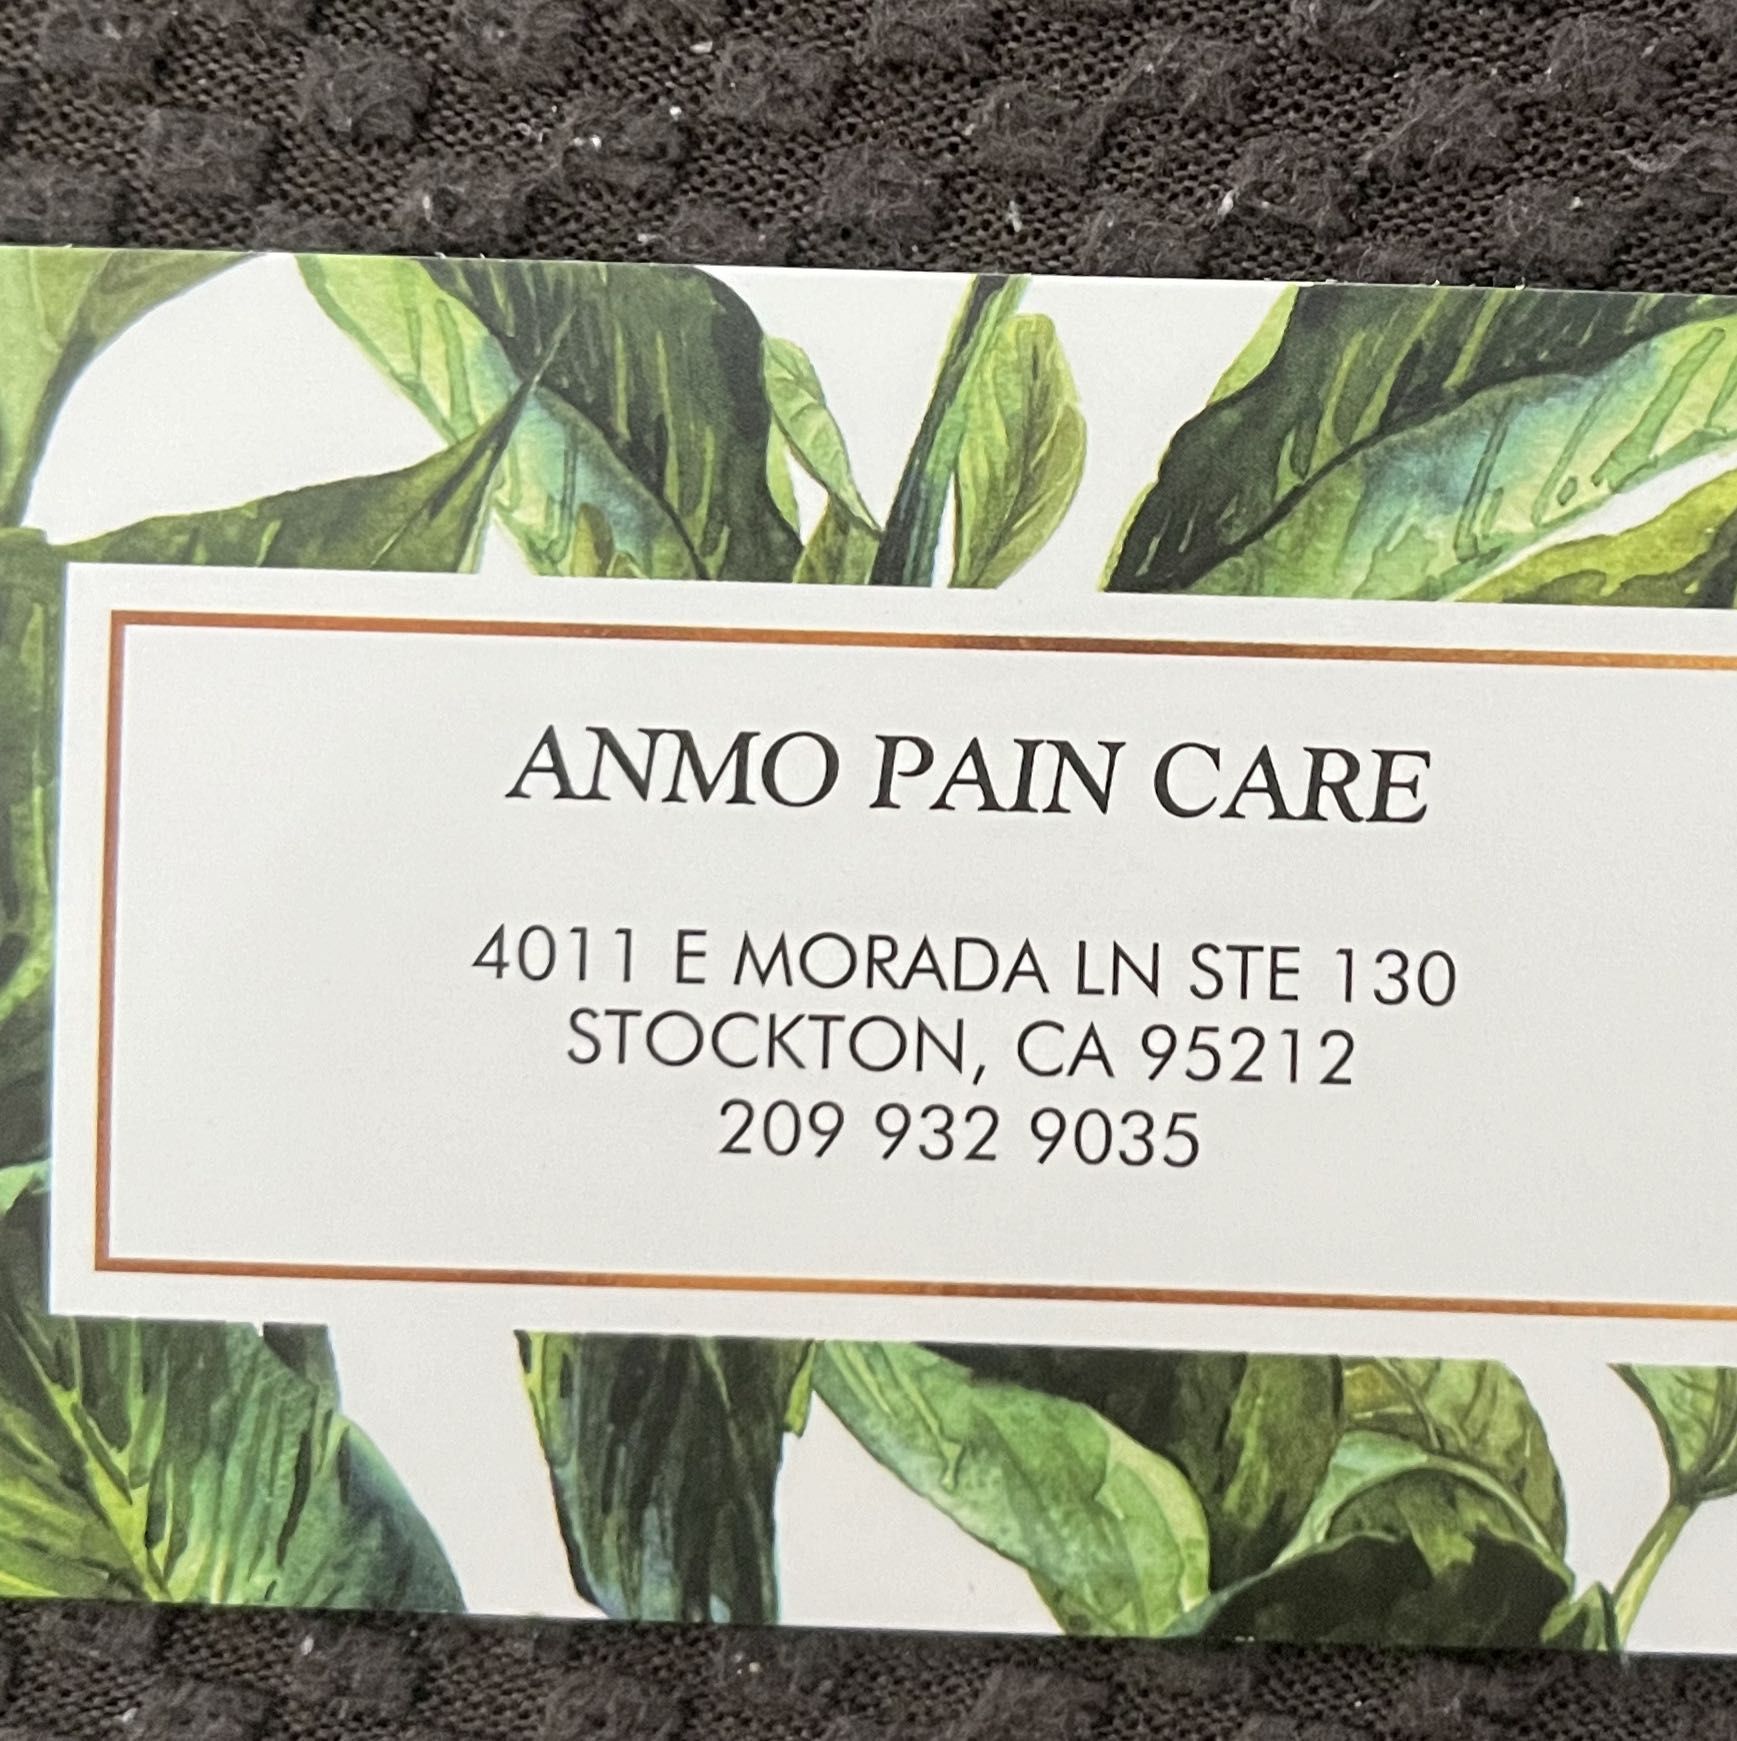 Anmo Pain Care, 4011 Morada Ln STE 130, Stockton, 95212